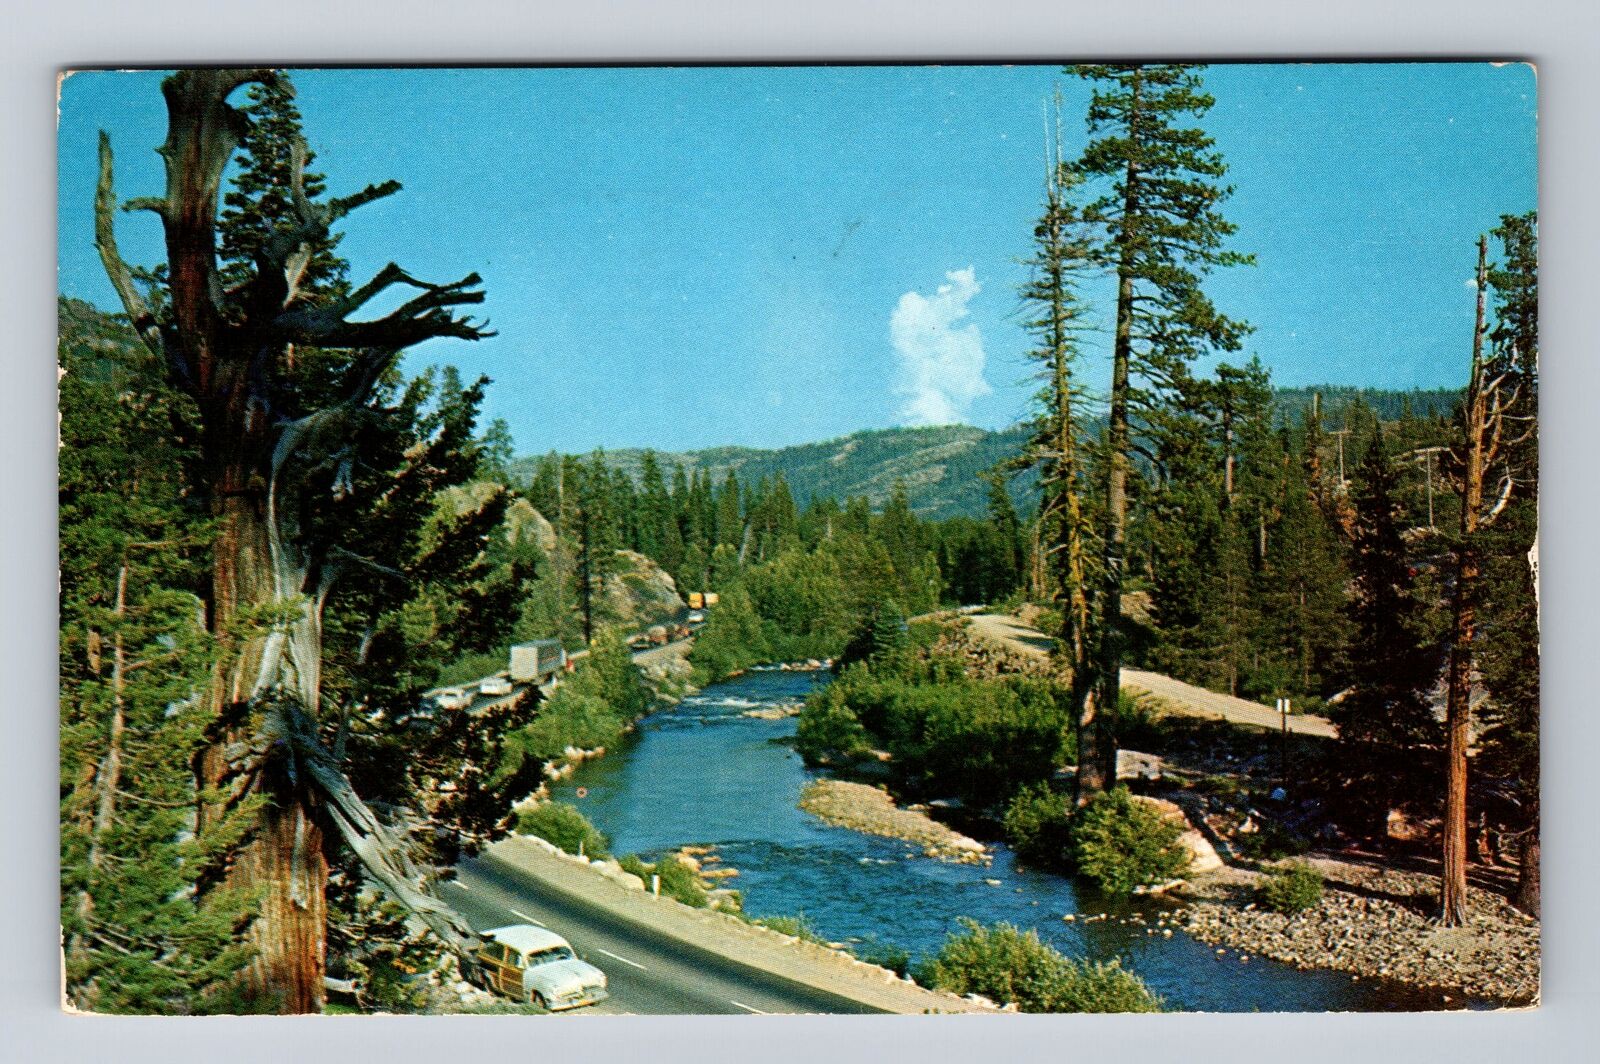 CA-California, Yuba River, Antique, Vintage c1960 Postcard